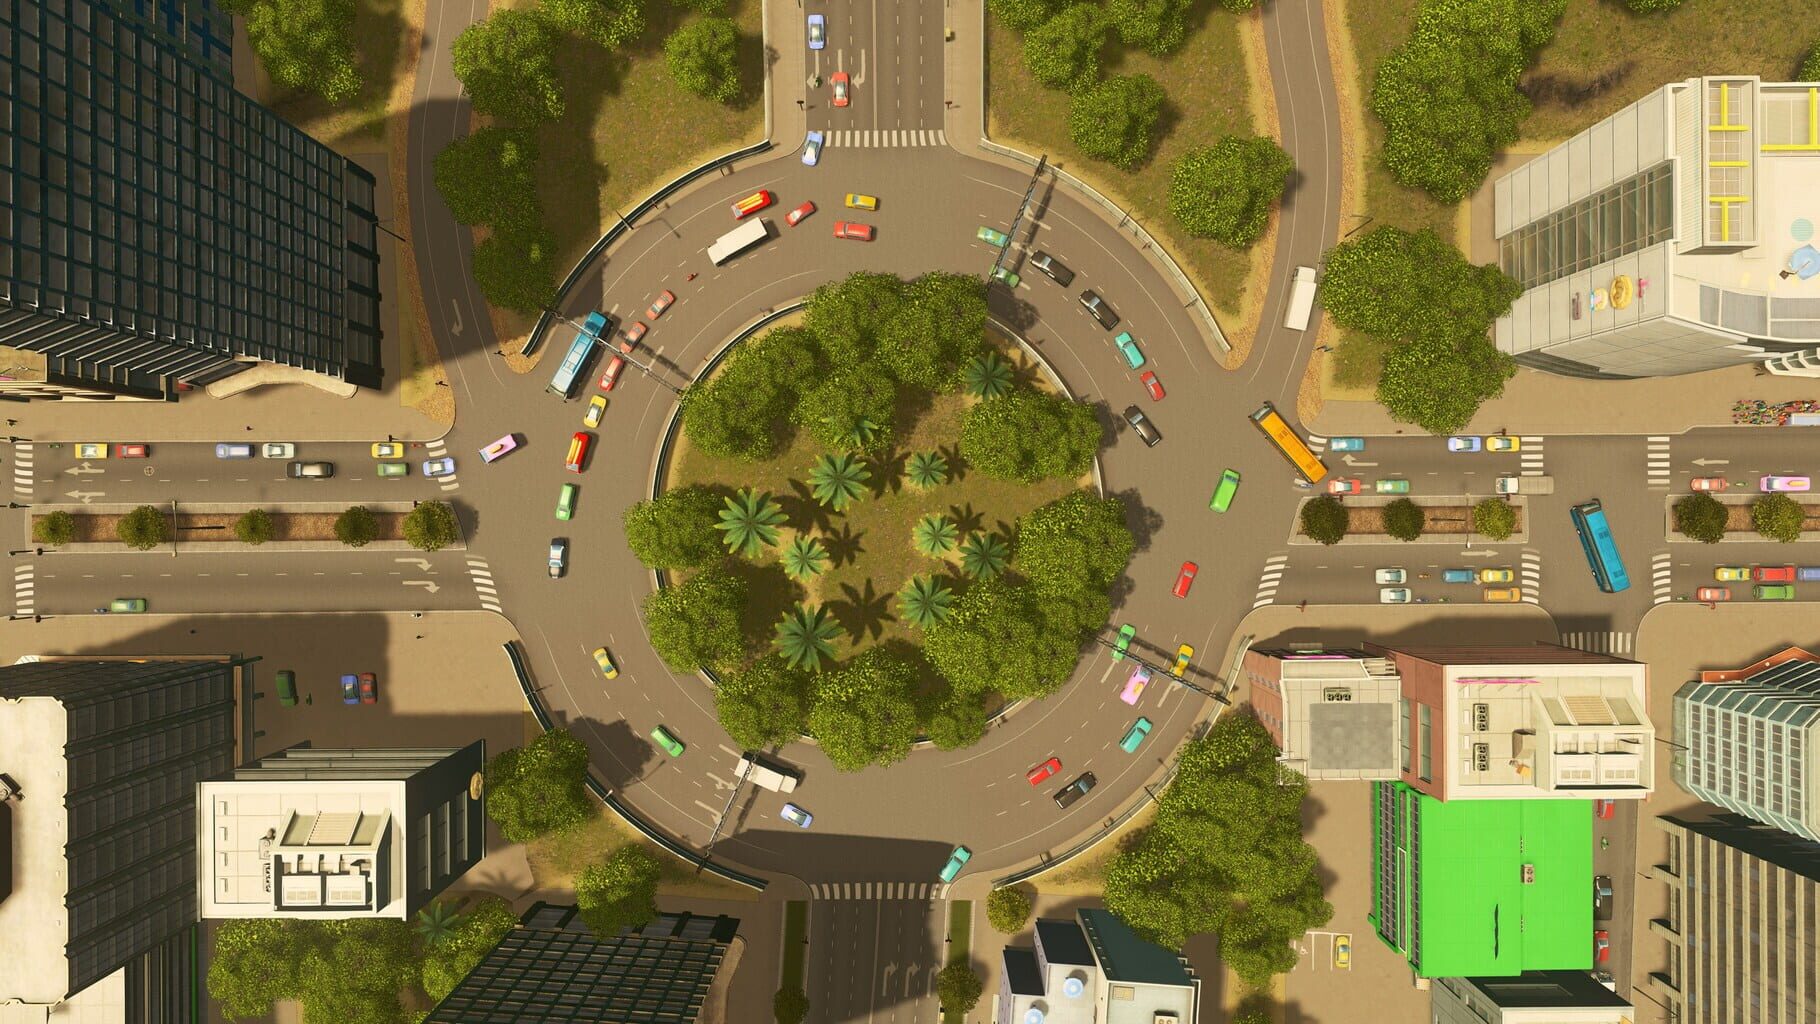 Cities: Skylines - Remastered screenshots